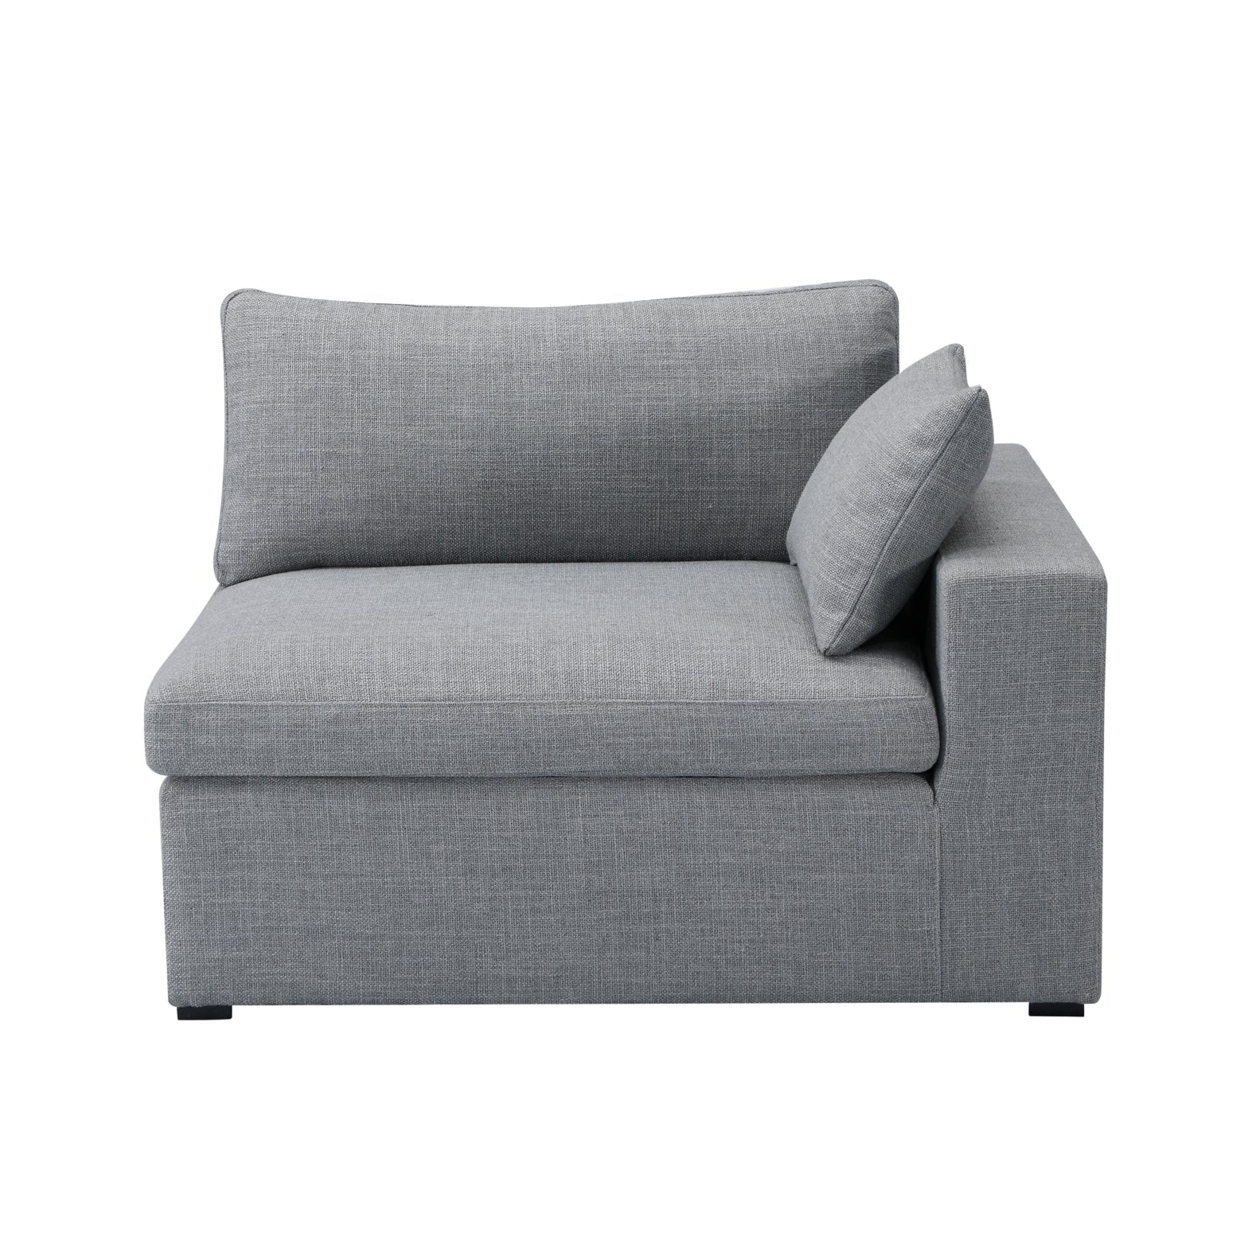 InÃ¨s Sofa - 1-Seater Single Module With Left Arm - Grey Fabric